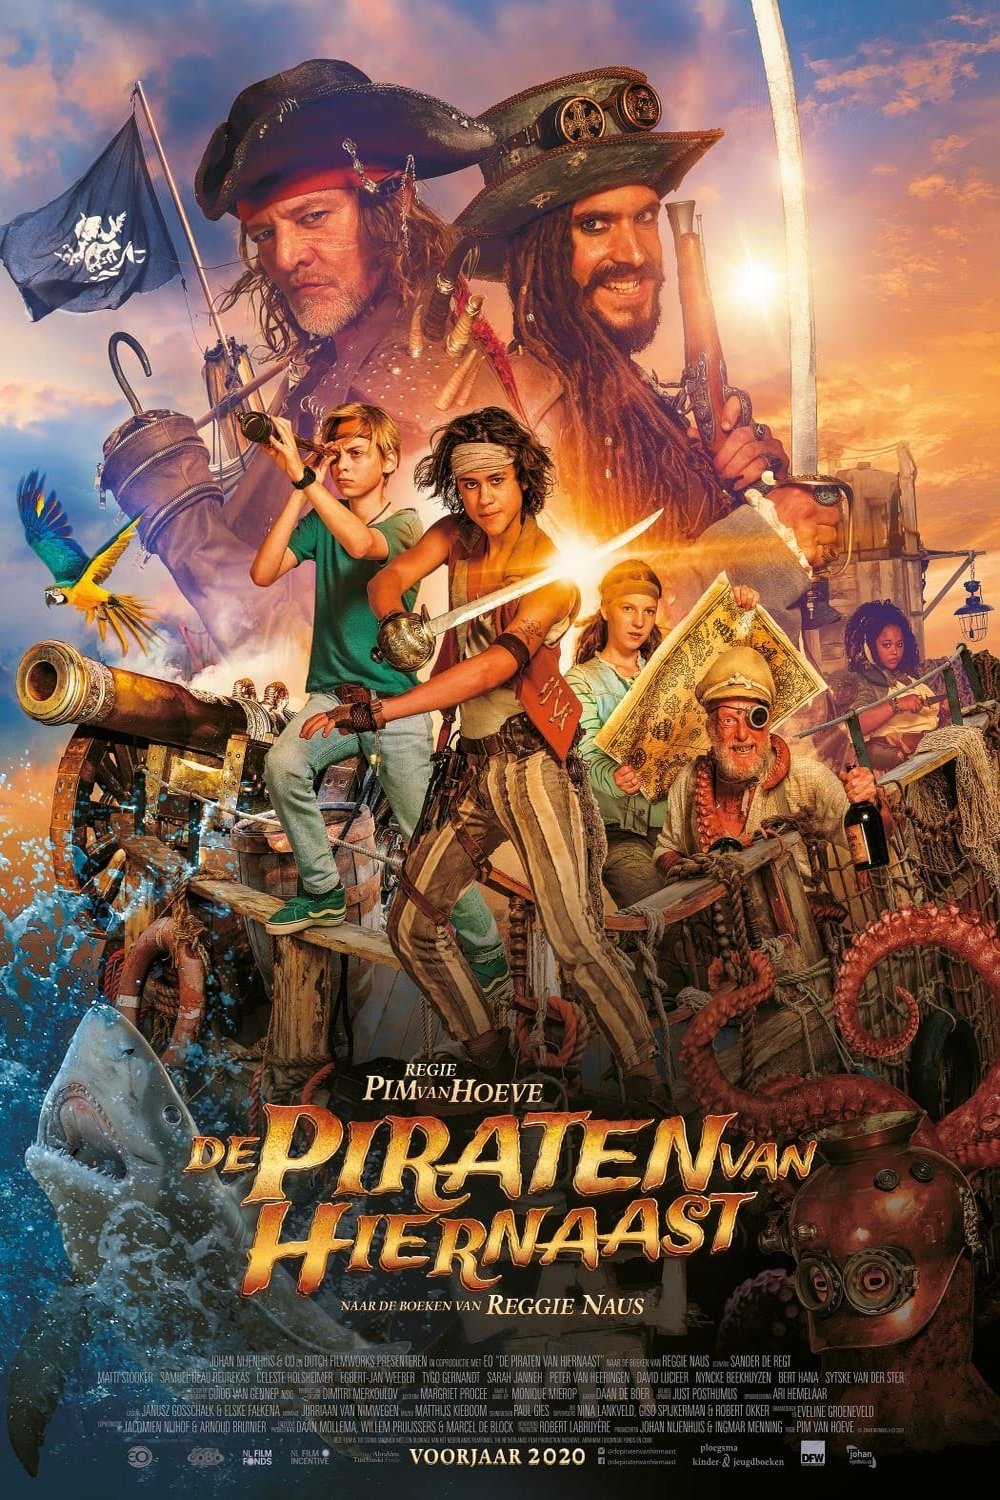 L'affiche originale du film De piraten van hiernaast en Néerlandais